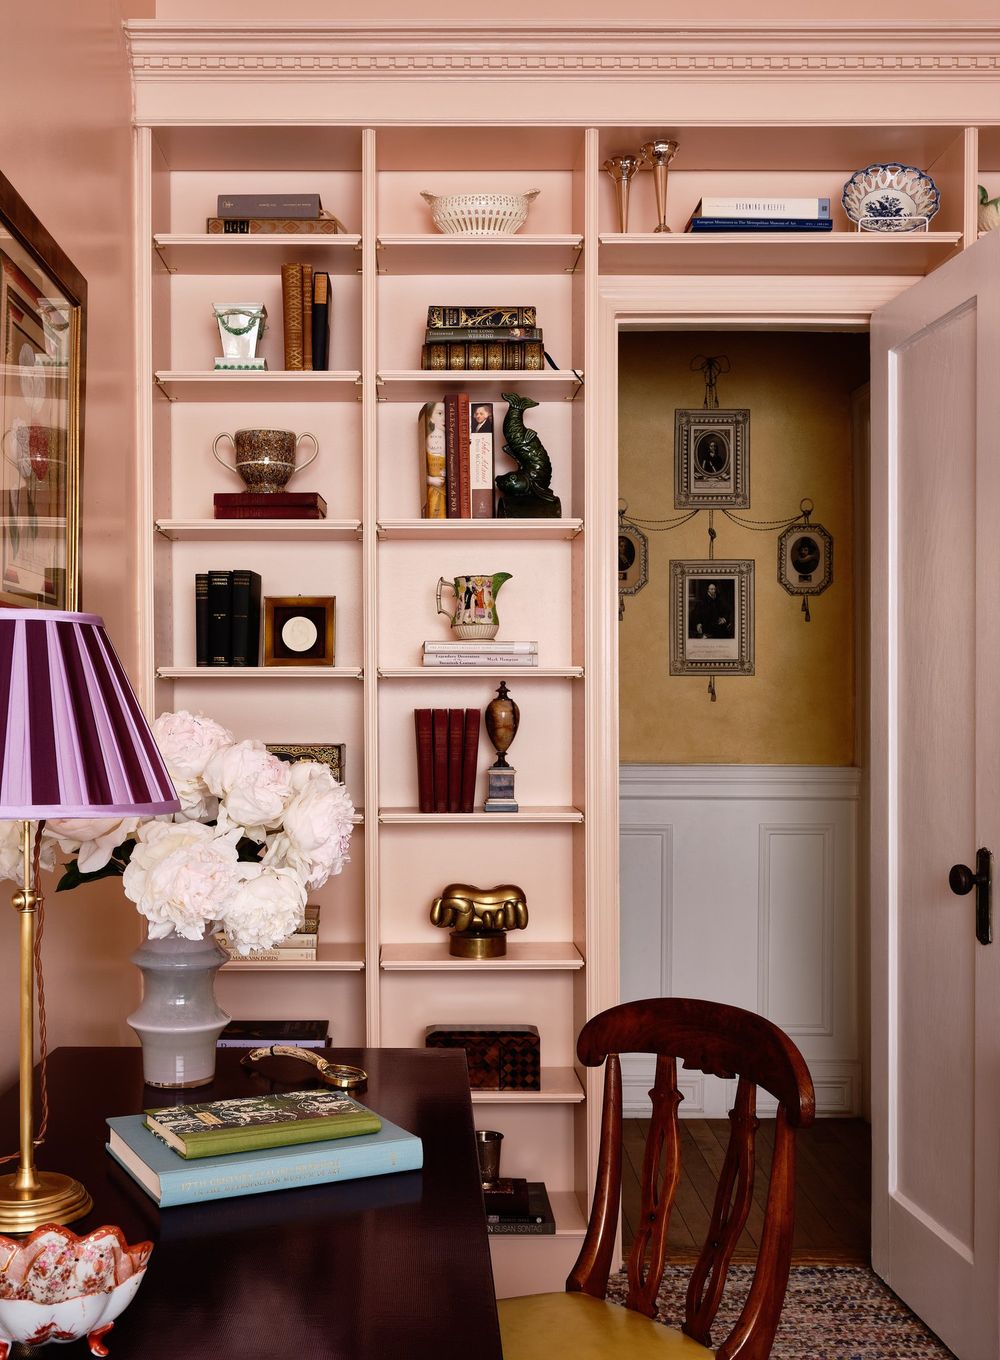 Home Shelving ideas Built-in Bookshelves lucydoswellinteriors